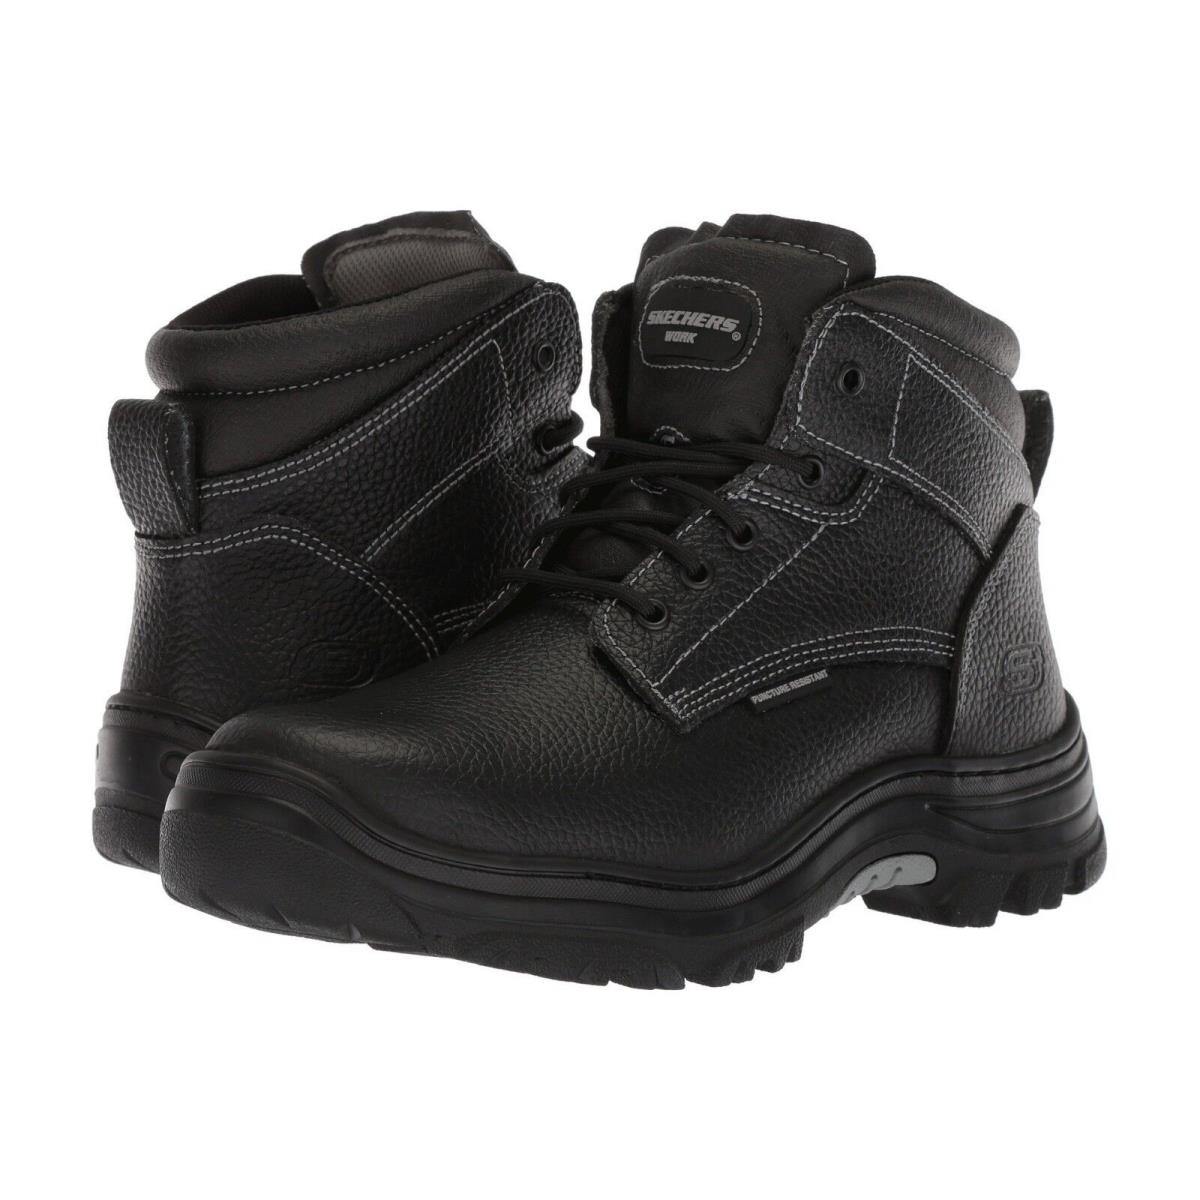 Skechers Men`s Steel Toe Work Boots Puncture Resistant Leather Lightweight Shoes Black